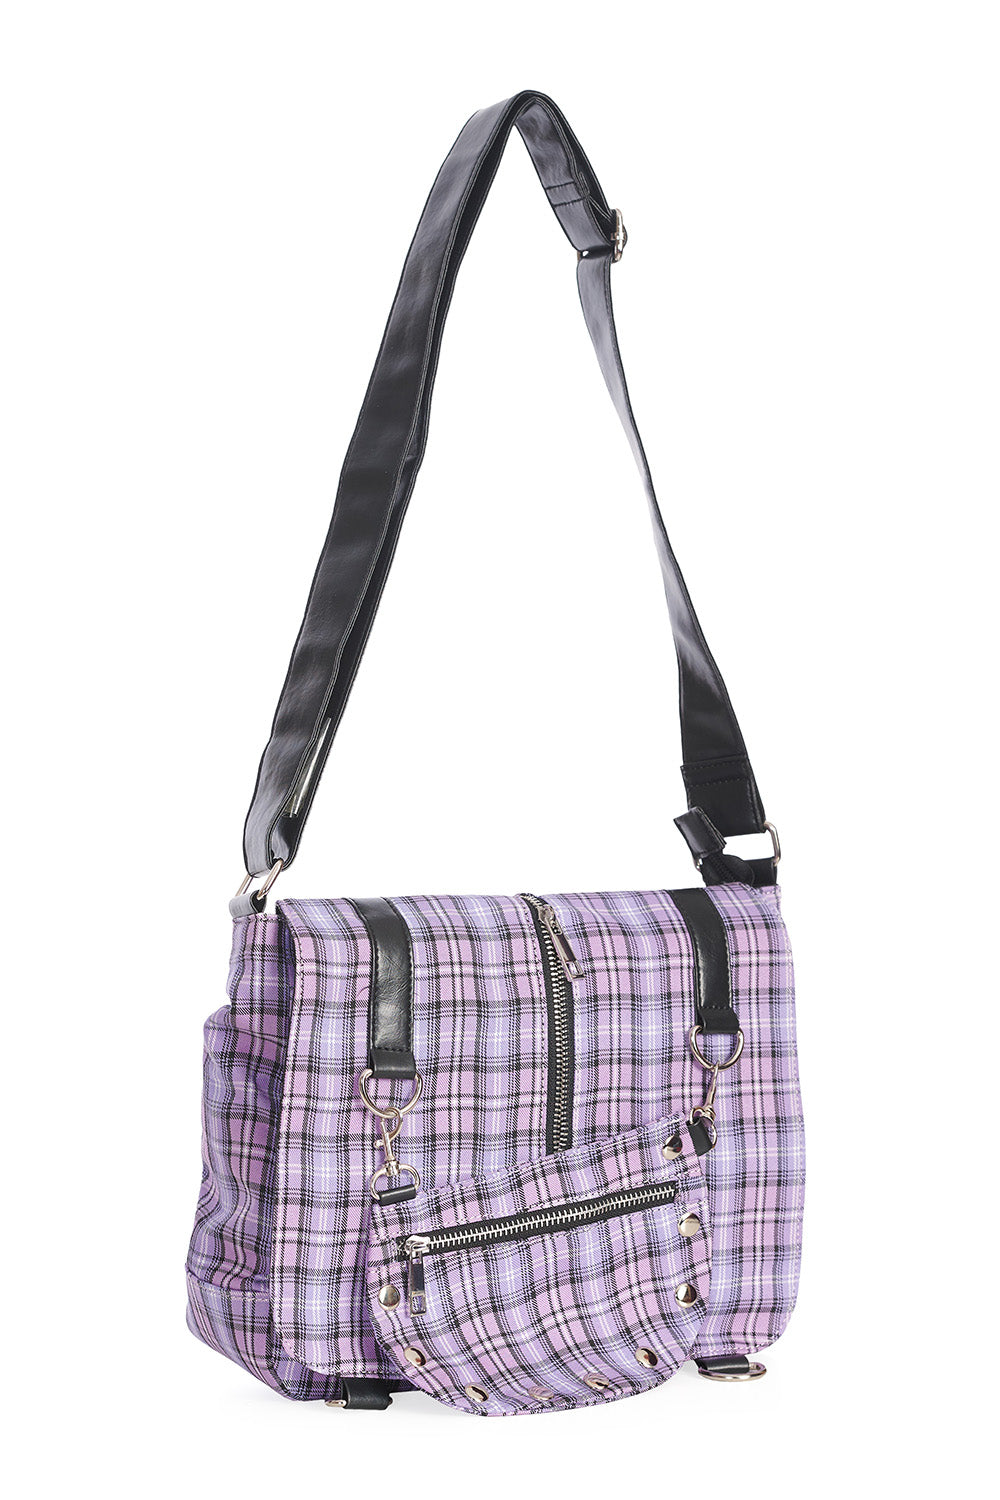 Punk Plaid Print Tartan Messenger Shoulder Bag Crossbody Handbag Women's Purse (Lilac)